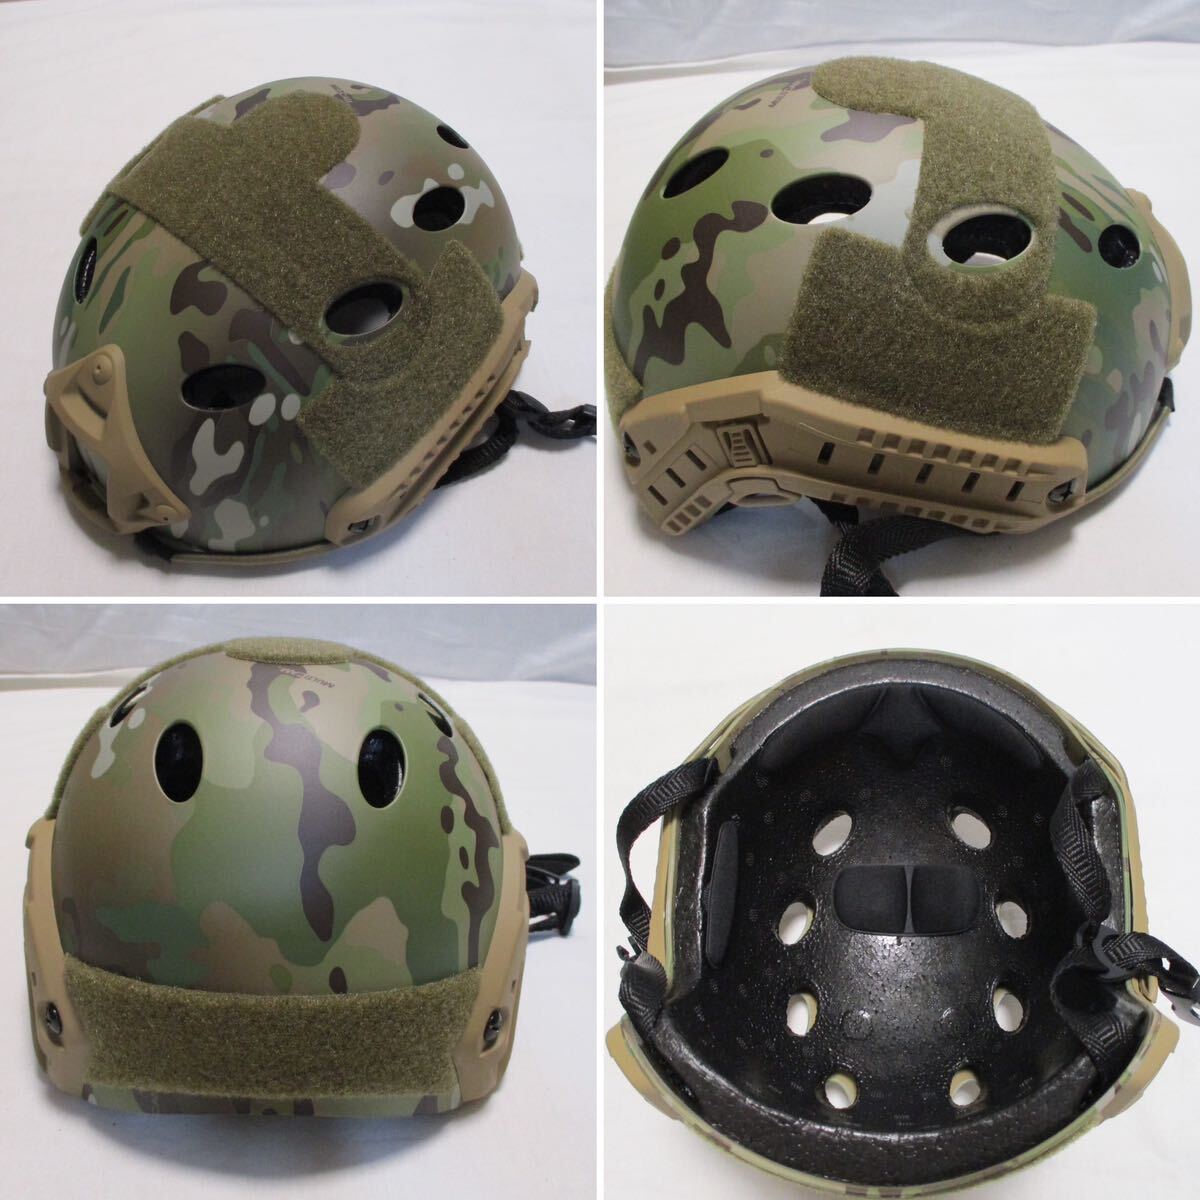 M240412B120* military airsoft fixtures equipment belt helmet Tactical Vest mask pouch summarize .* Yahoo auc .... shipping!*